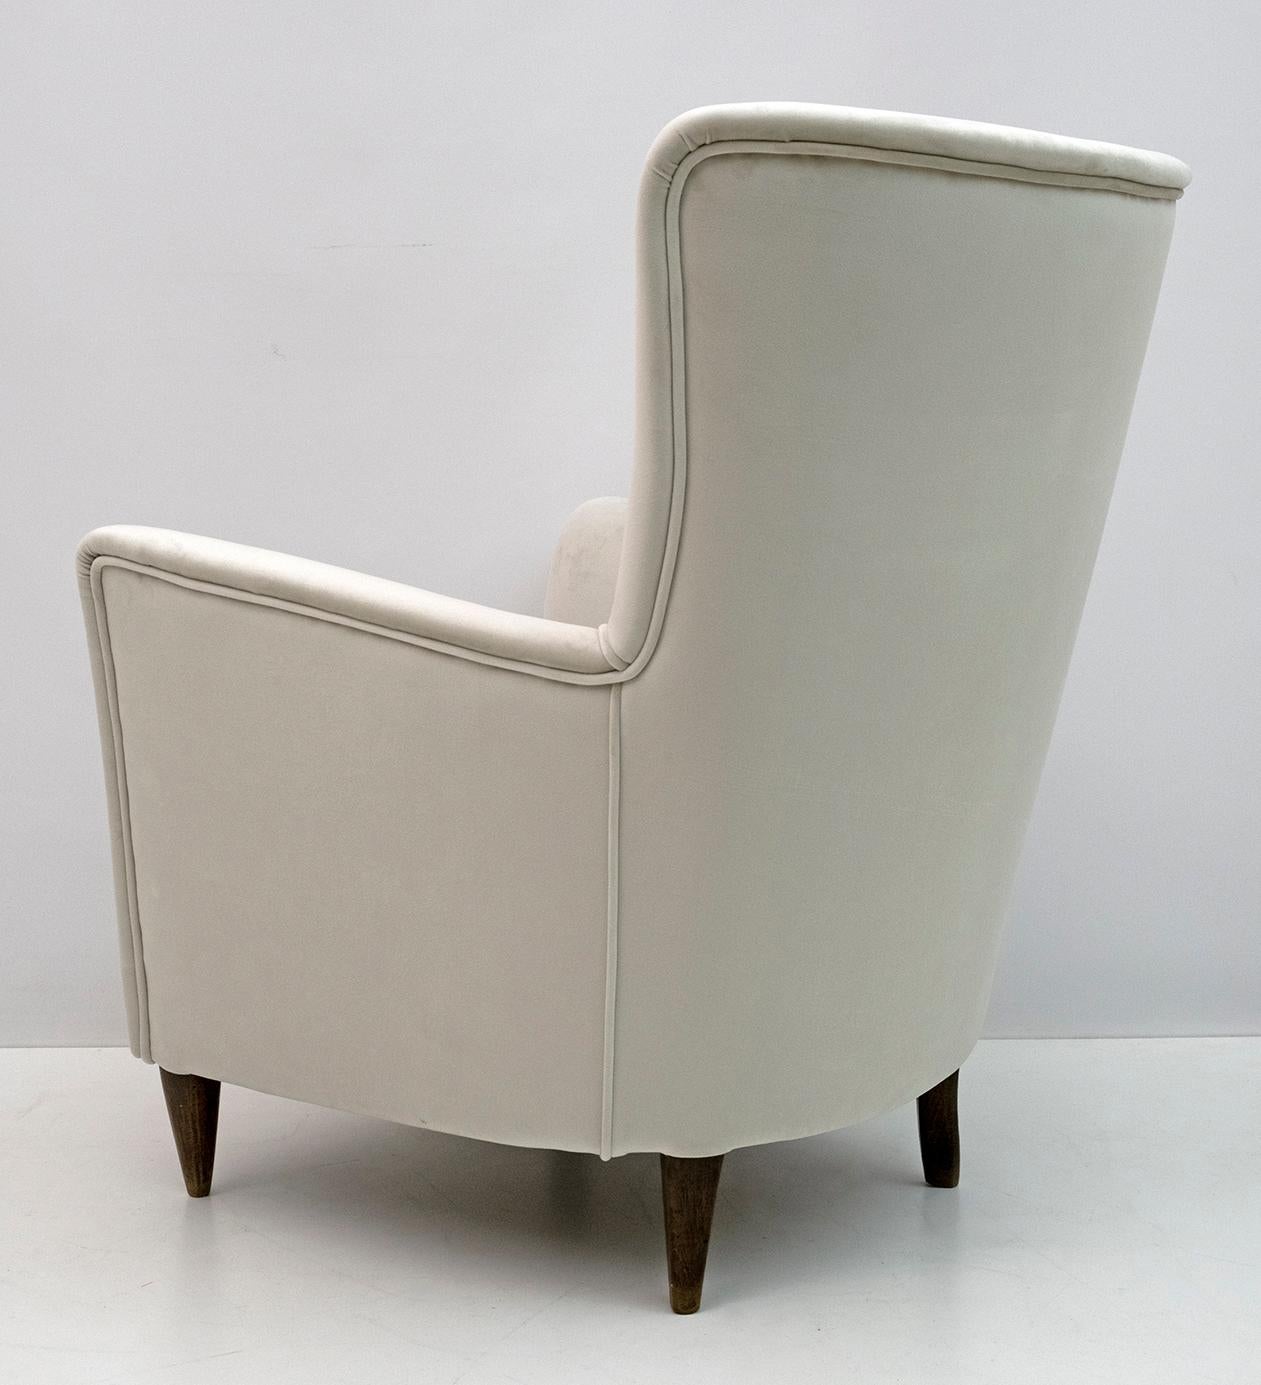 Attributed Gio Ponti Mid-Century Modern Italian Velvet Armchair for Isa, 1950s For Sale 2